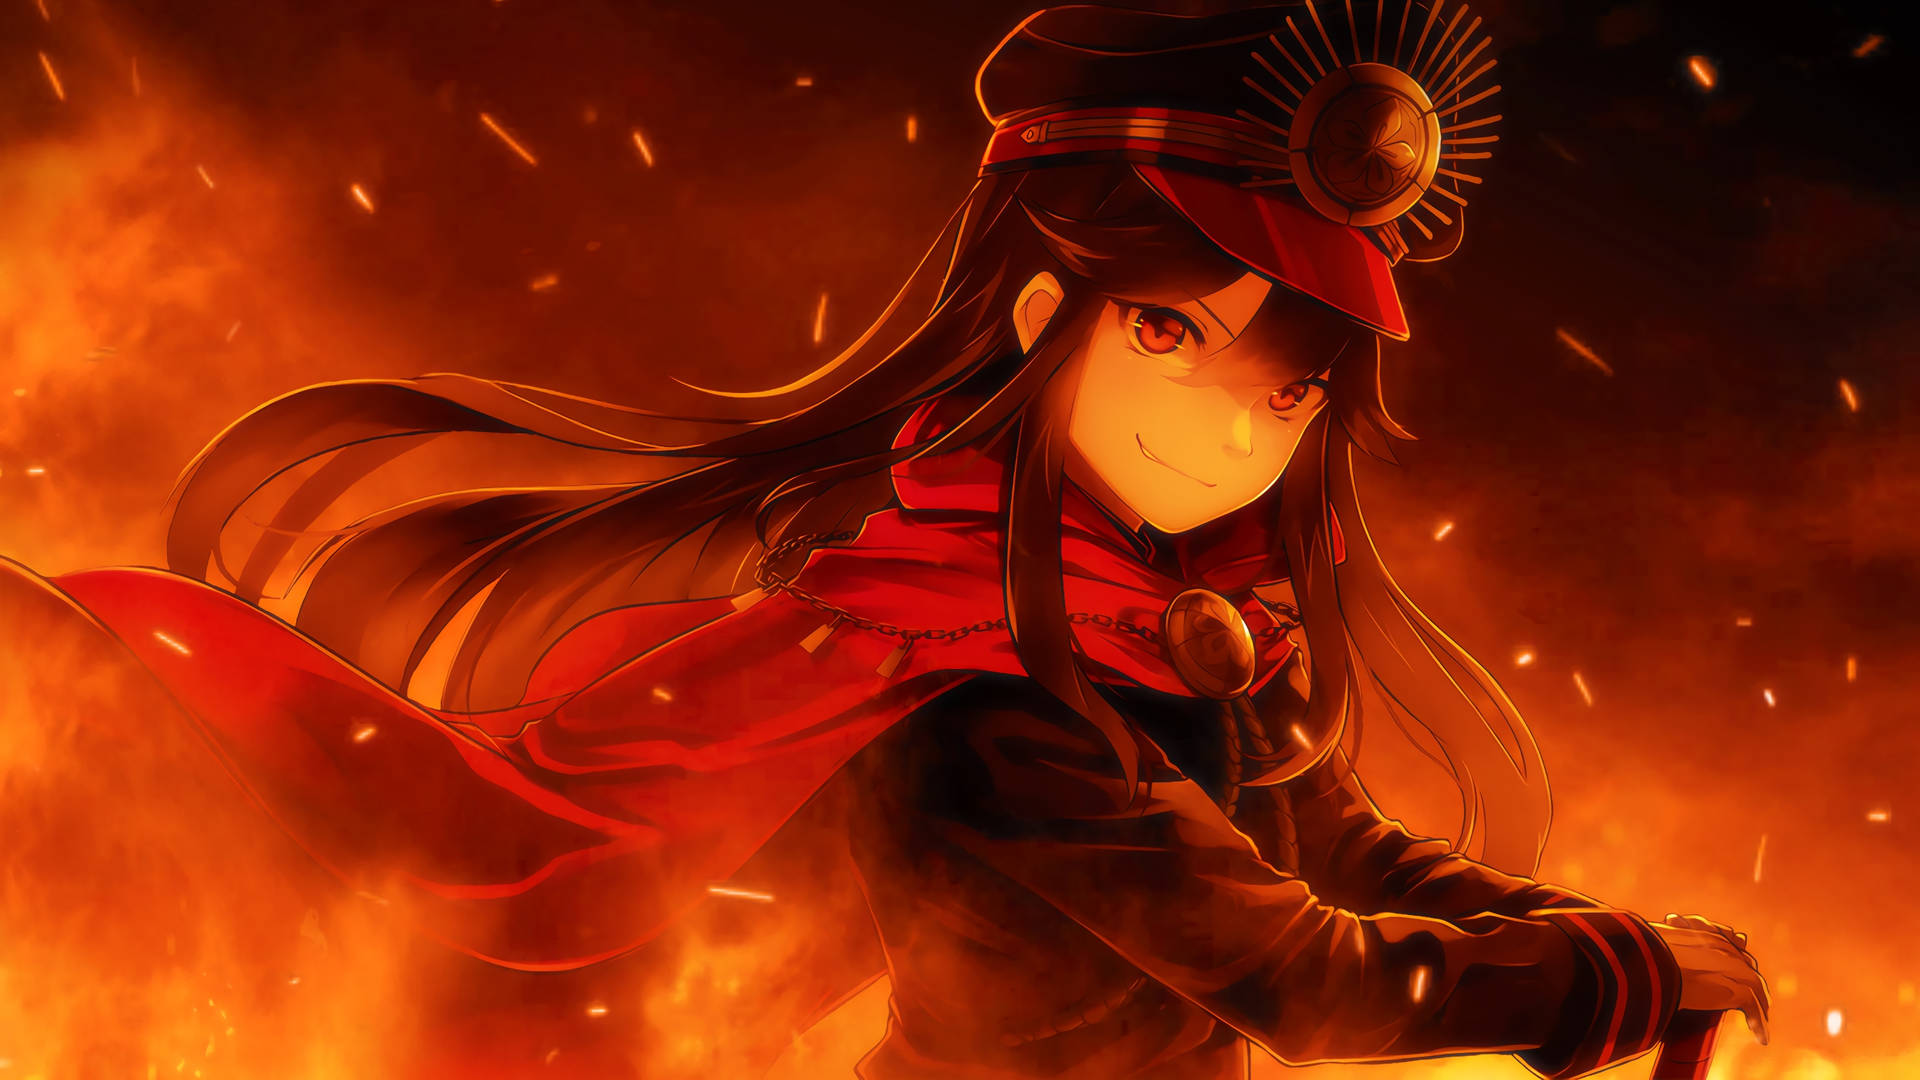 Oda Nobunaga Fire Anime Background